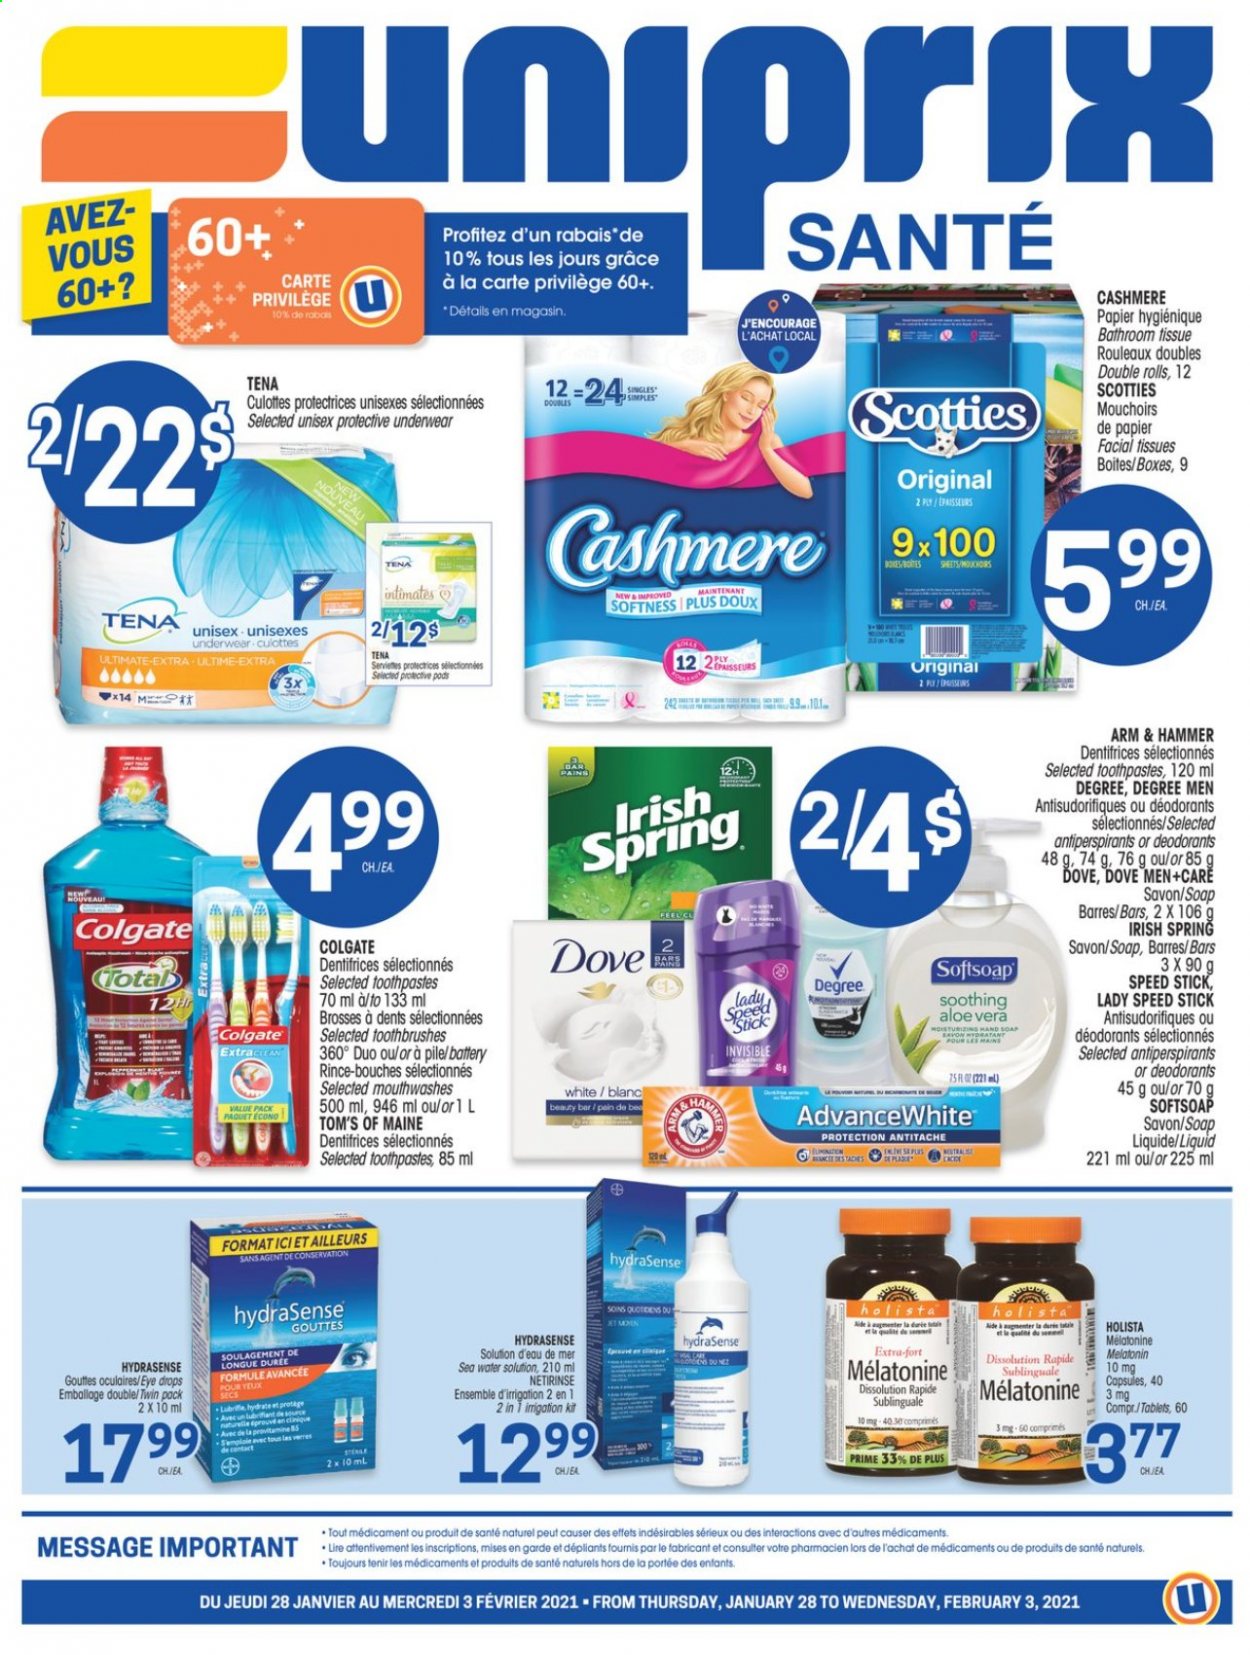 thumbnail - Uniprix Santé Flyer - January 28, 2021 - February 03, 2021 - Sales products - ARM & HAMMER, bath tissue, Softsoap, hand soap, soap, facial tissues, Speed Stick, Melatonin, eye drops, deodorant. Page 1.